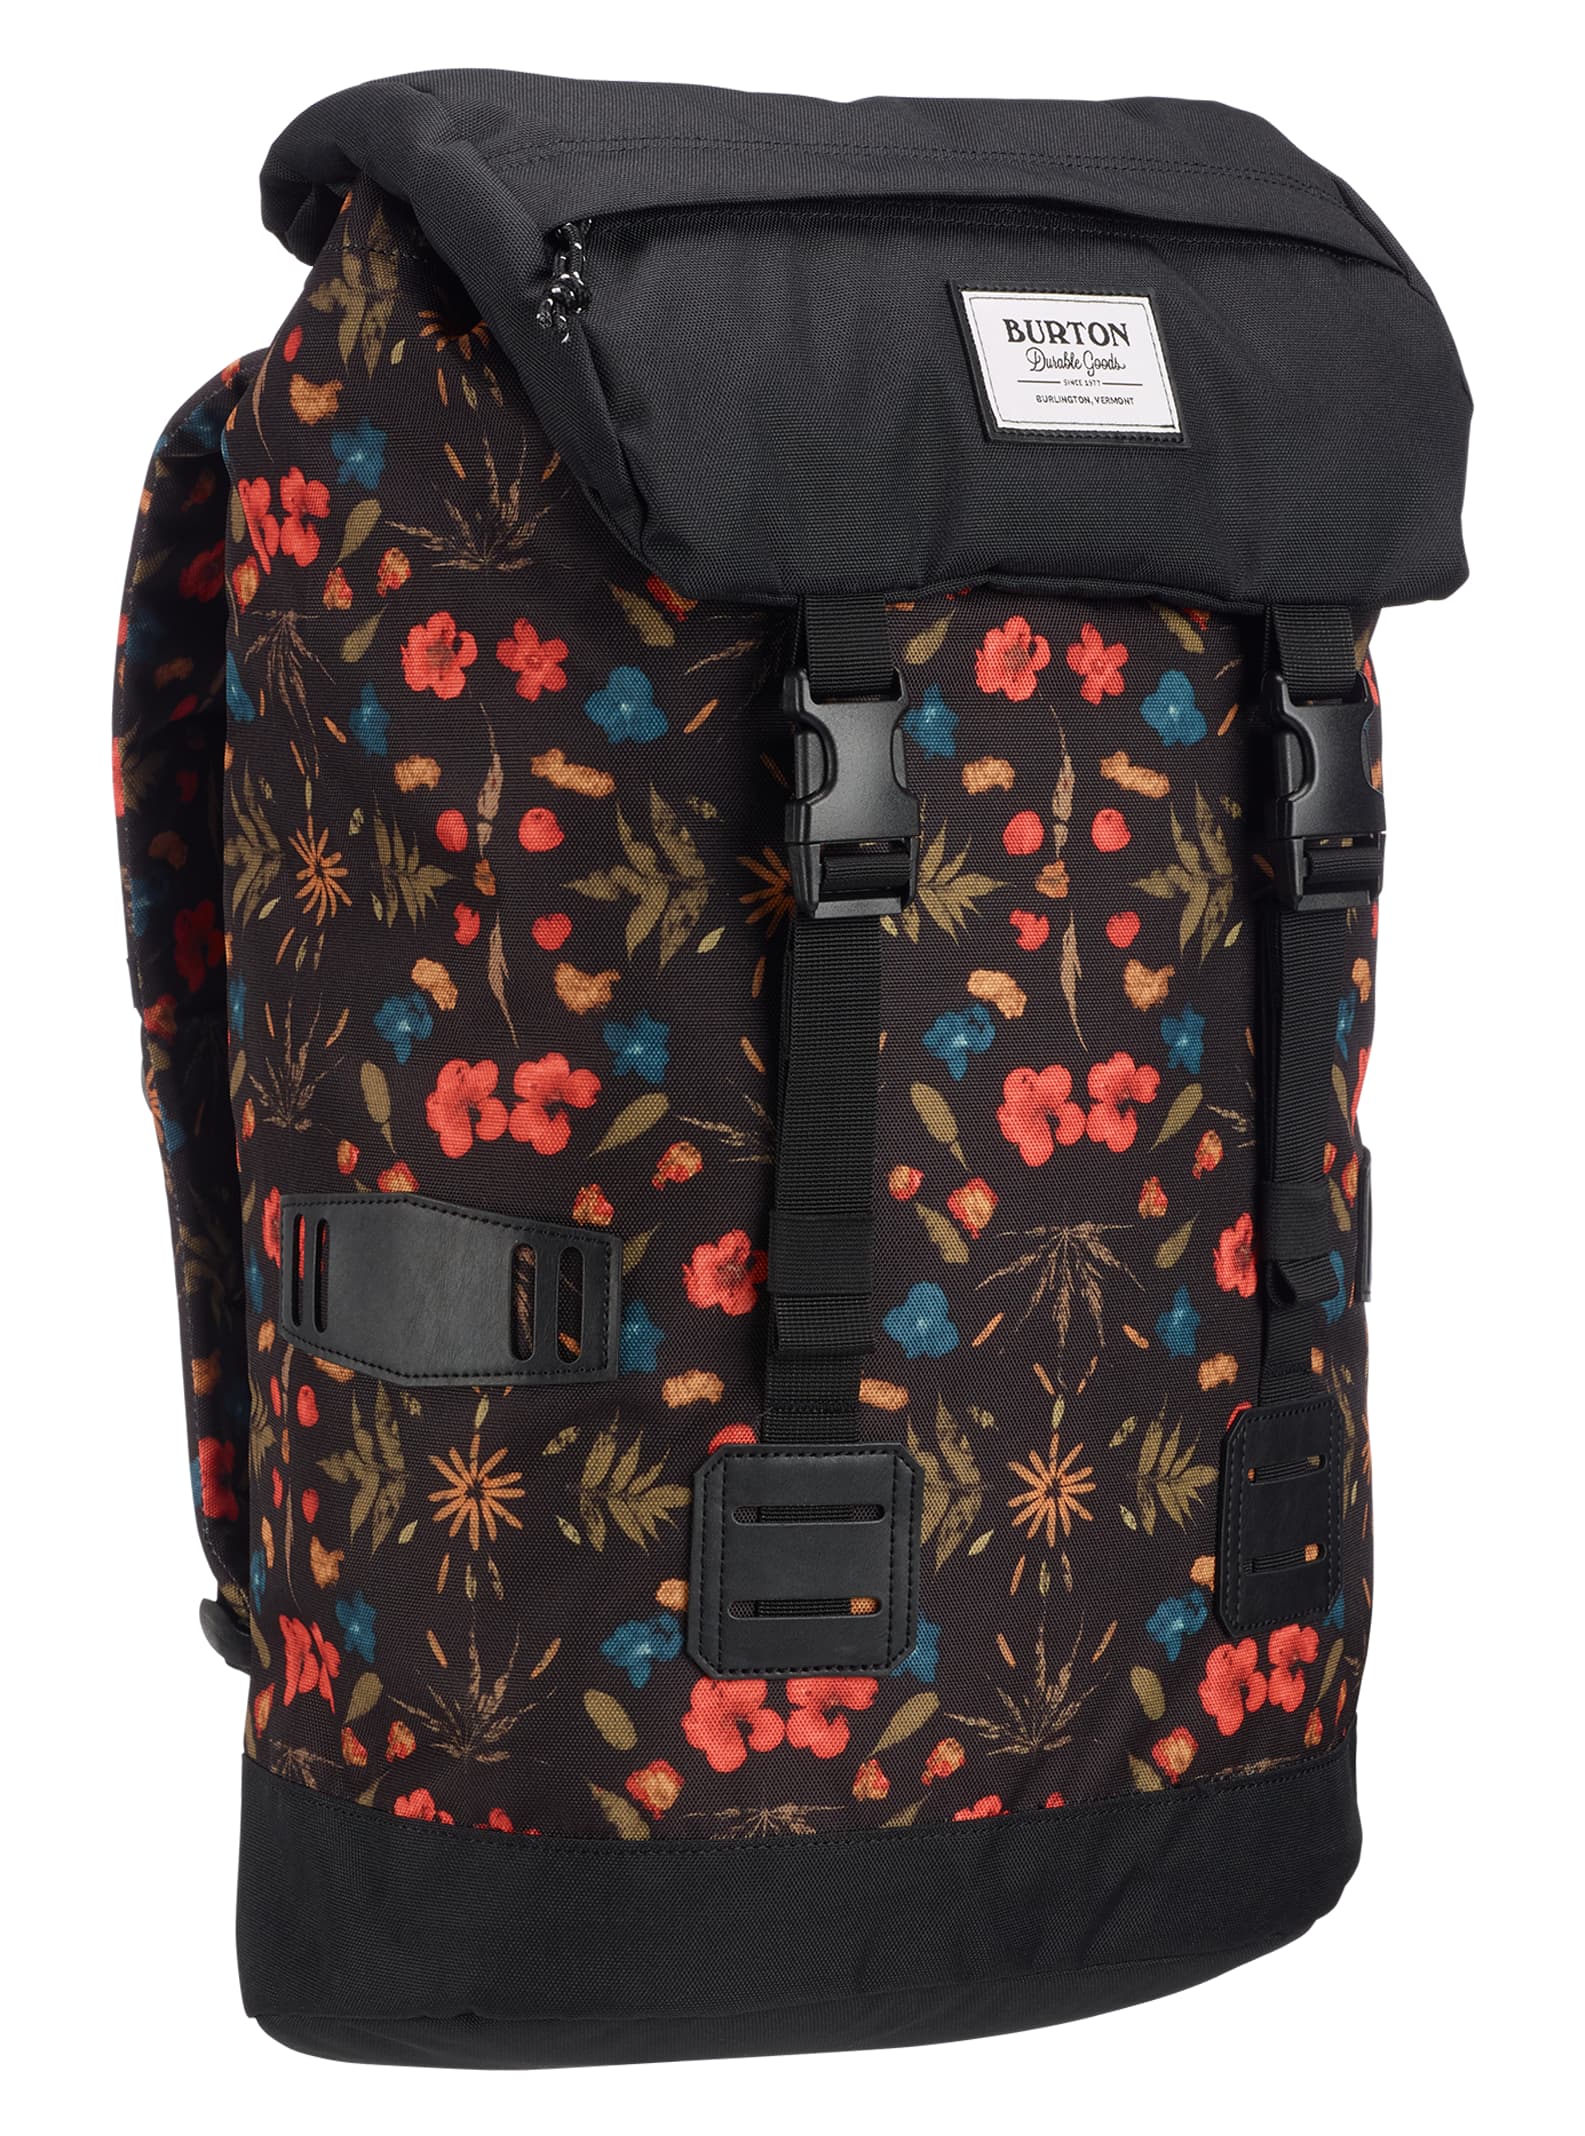 Burton Tinder 25L Backpack | Burton.com Spring / Summer 2019 US